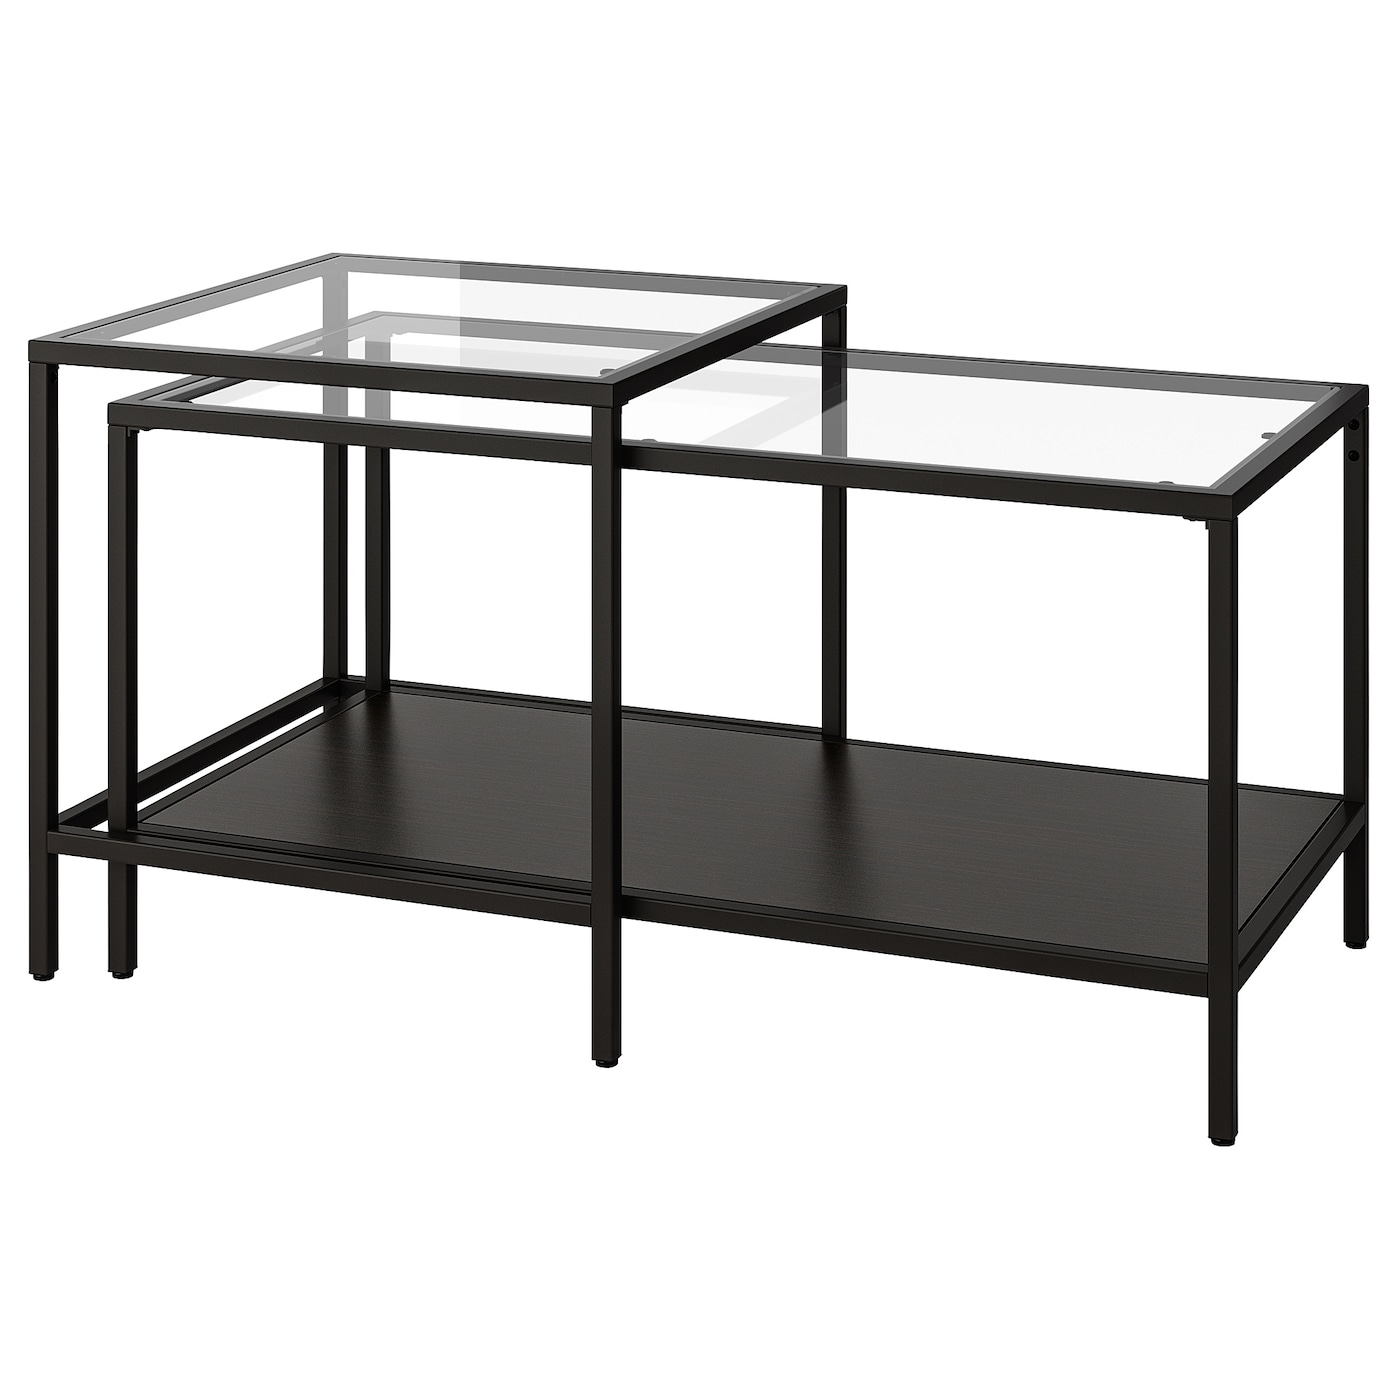 Комплект столов, 2 шт. - IKEA VITTSJÖ/ИКЕА ВИТШЁ , черно-коричневый/стекло